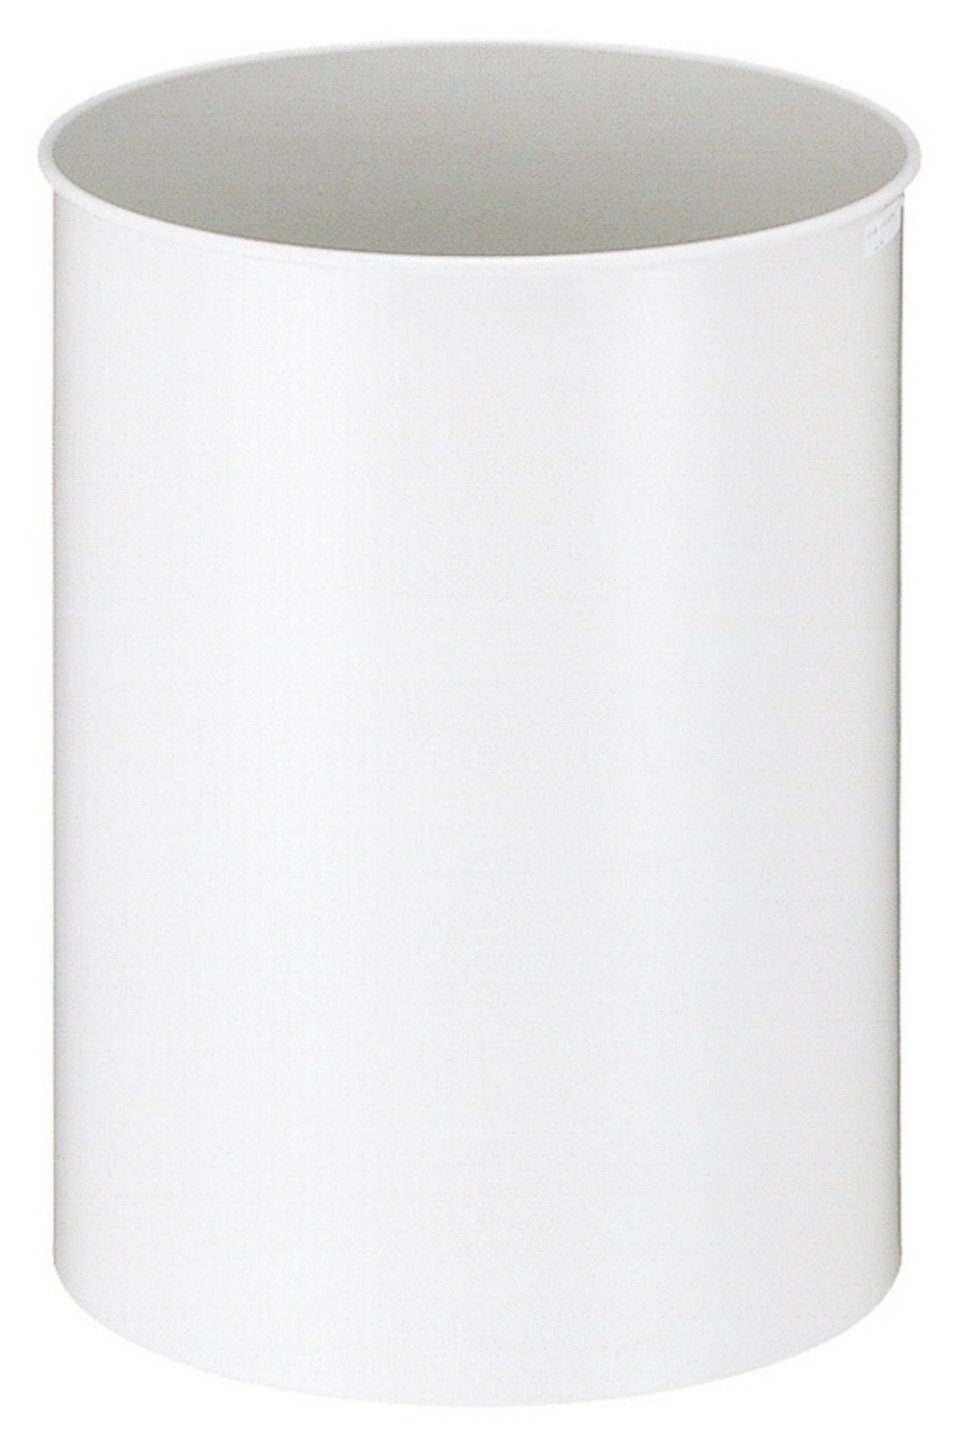 PROREGAL® Papierkorb Stillvoller runder Metall Papierkorb, 15L HxØ 30,5x25,5cm,  Grau Weiß